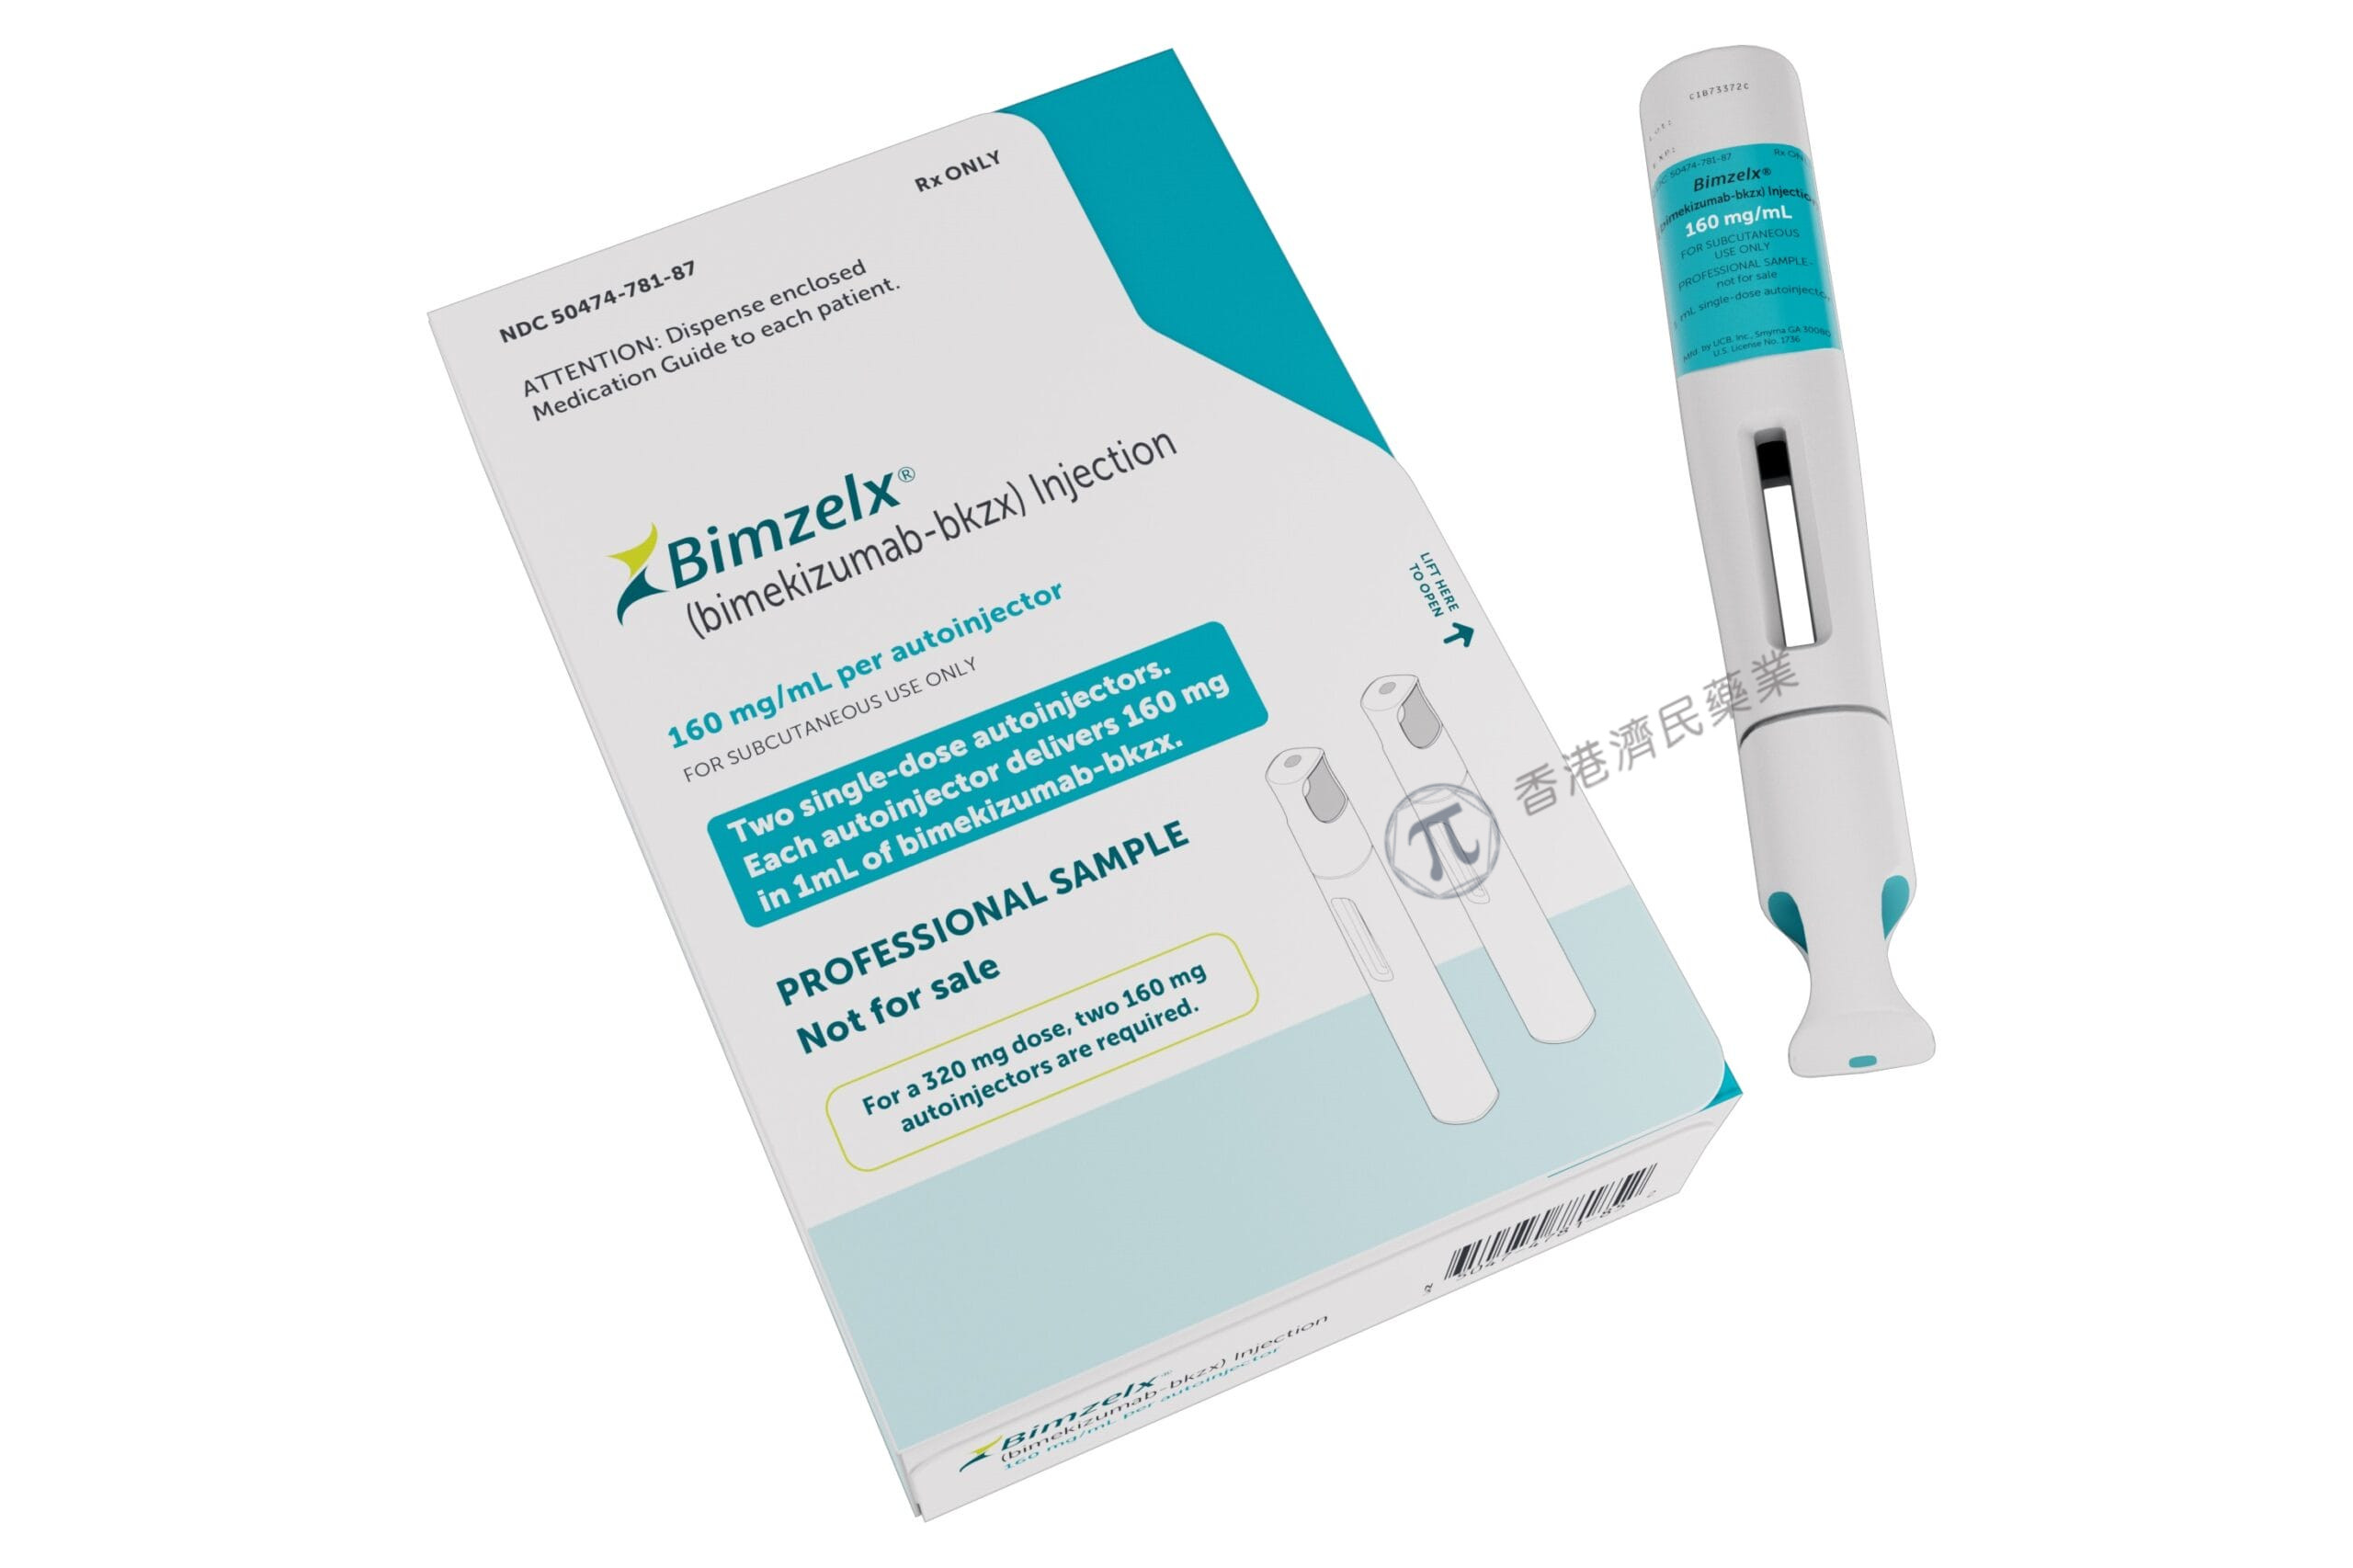 Bimzelx(bimekizumab-bkzx，比美吉珠单抗)治疗斑块型银屑病中文说明书-价格-适应症-不良反应及注意事项